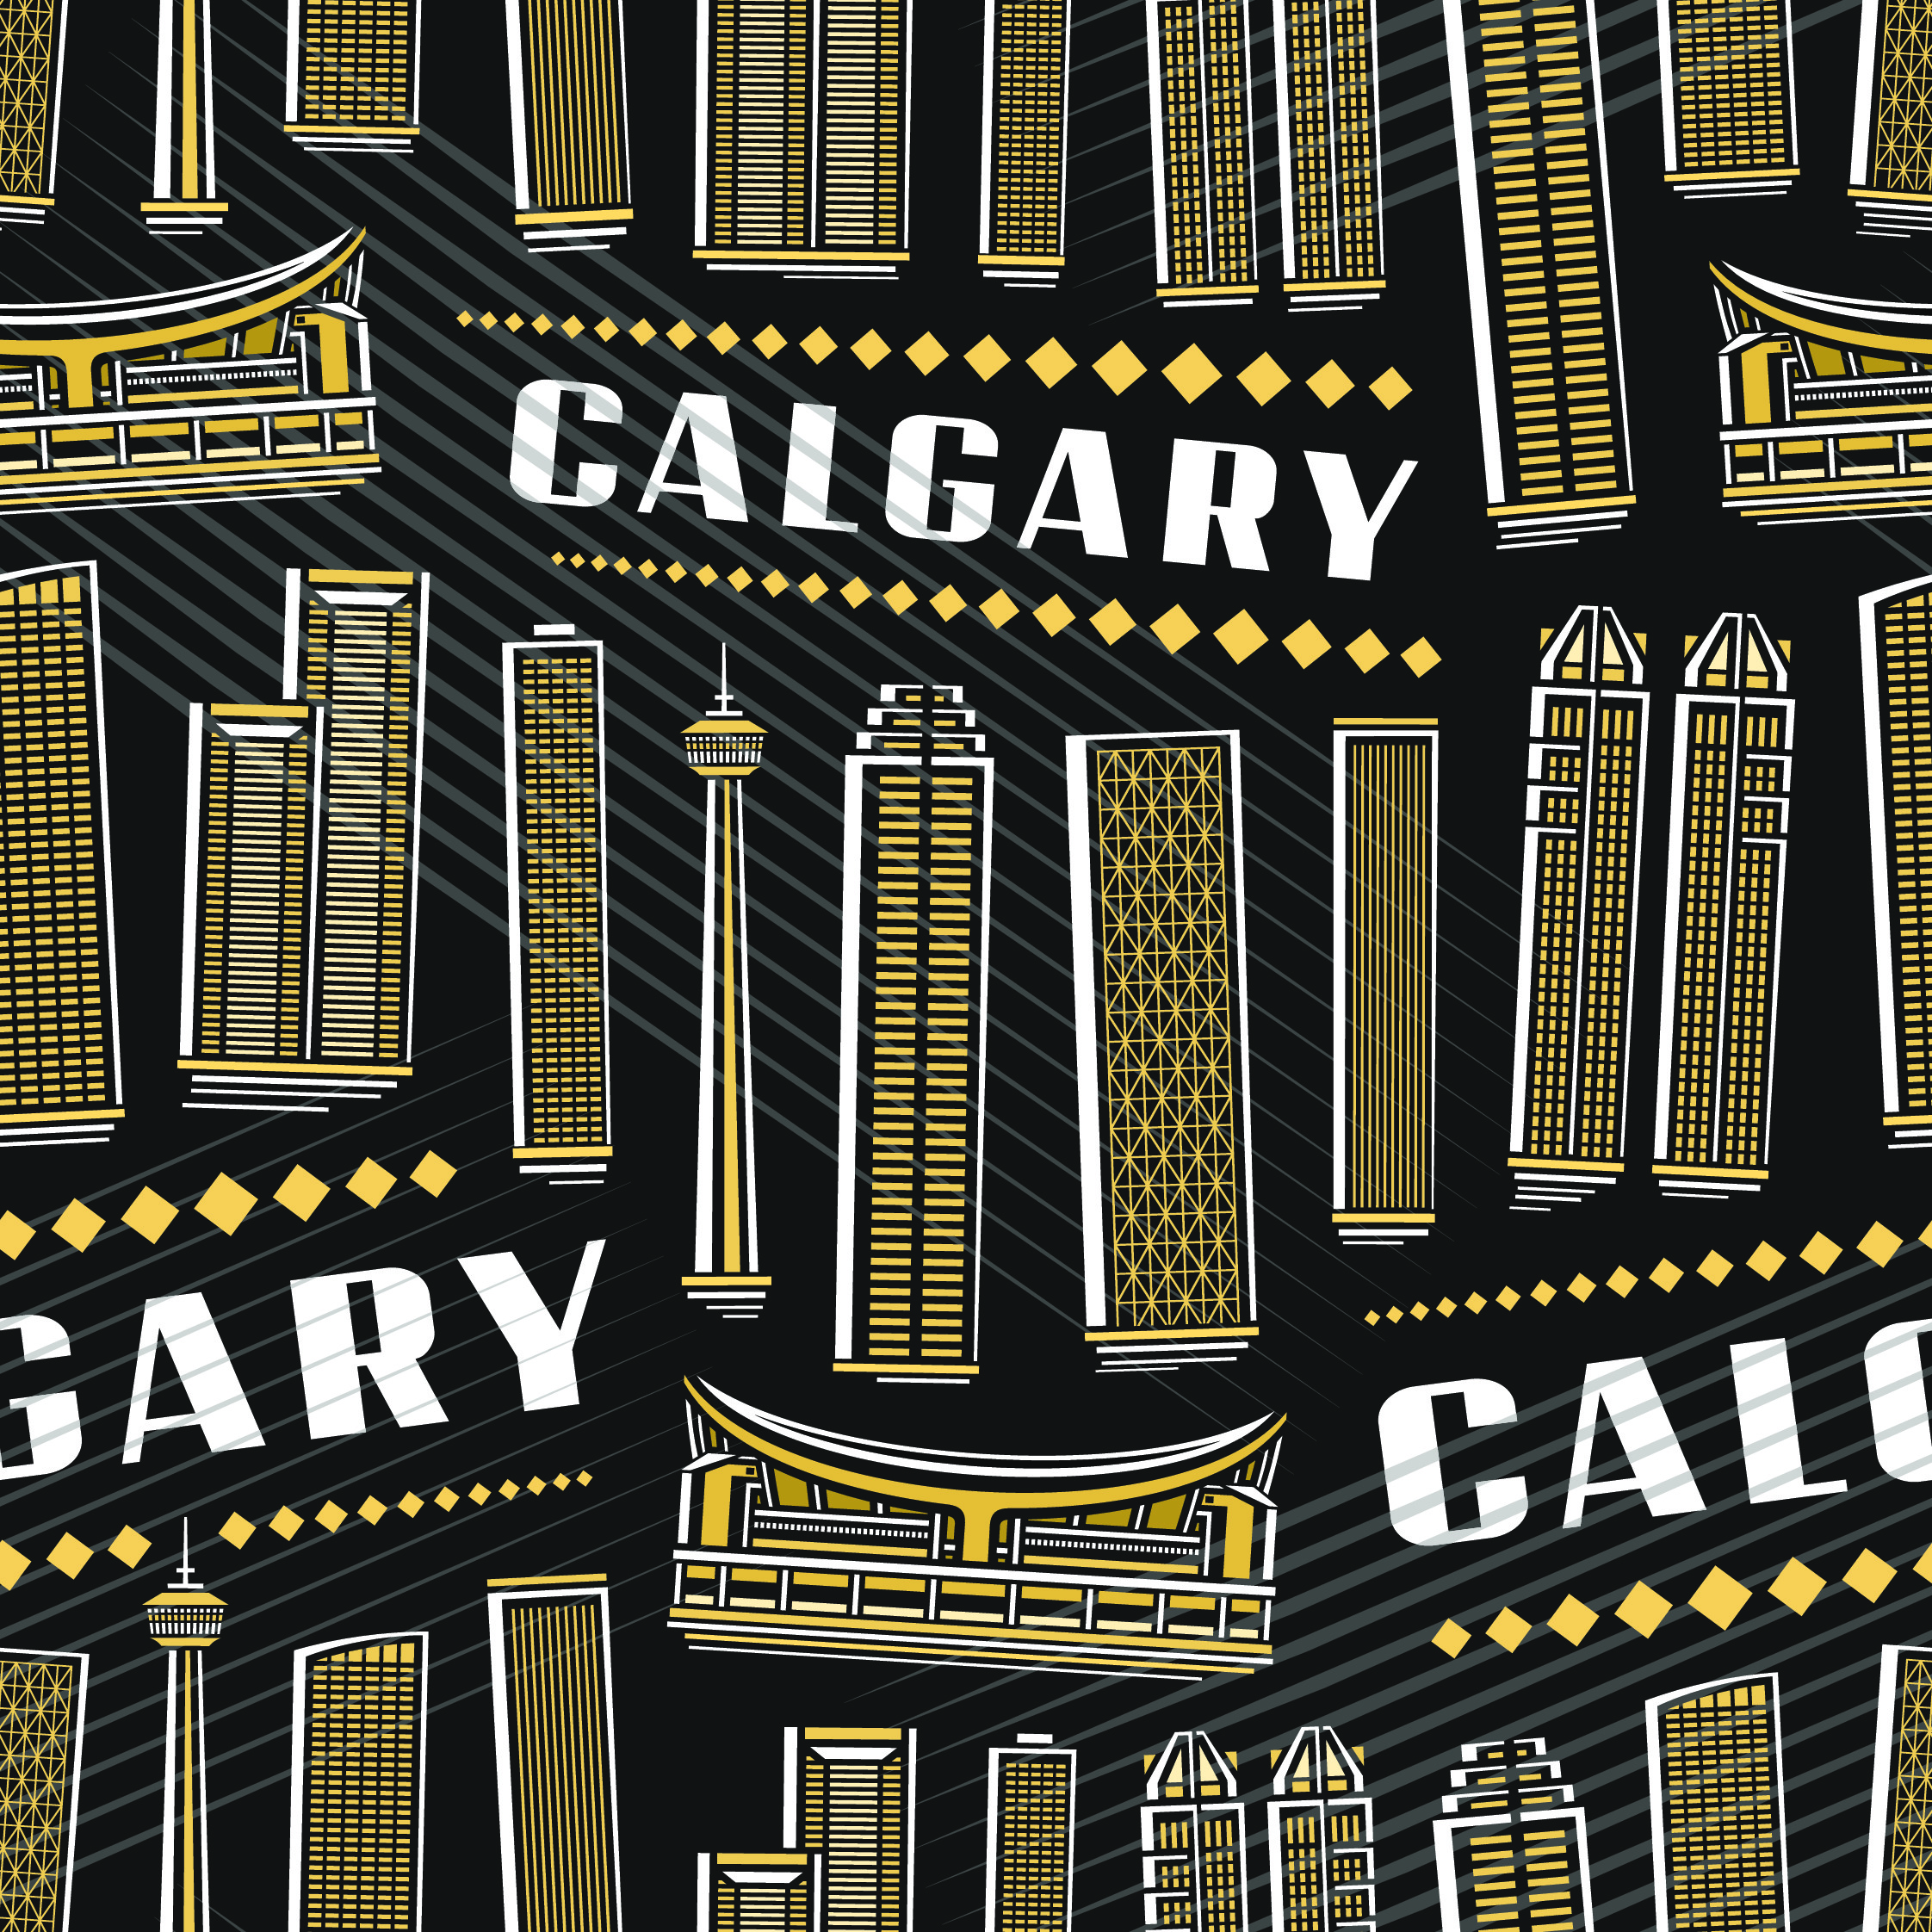 Exploring the Heart of Calgary: The Calgary Downtown Association